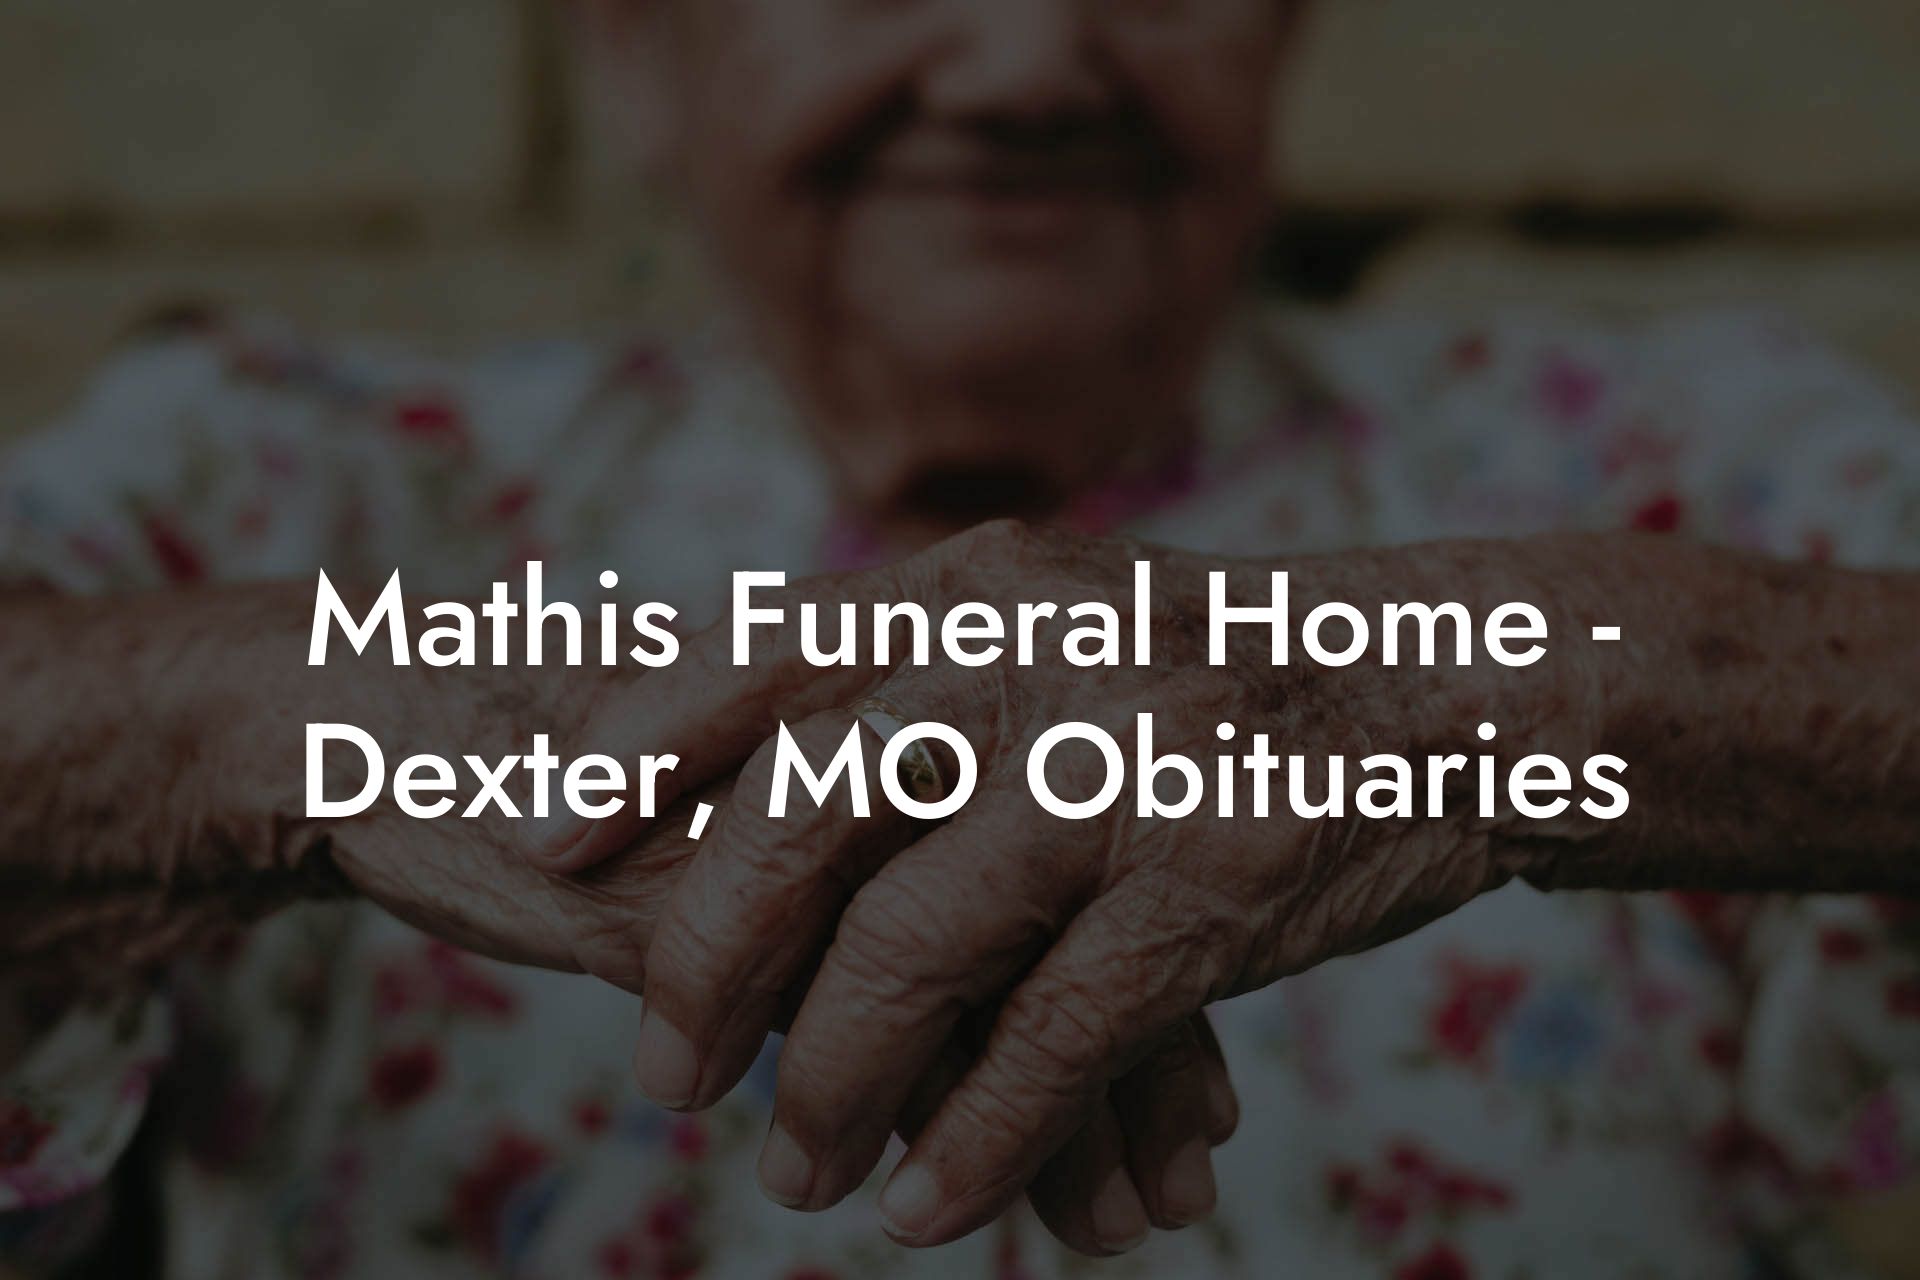 Mathis Funeral Home - Dexter, MO Obituaries